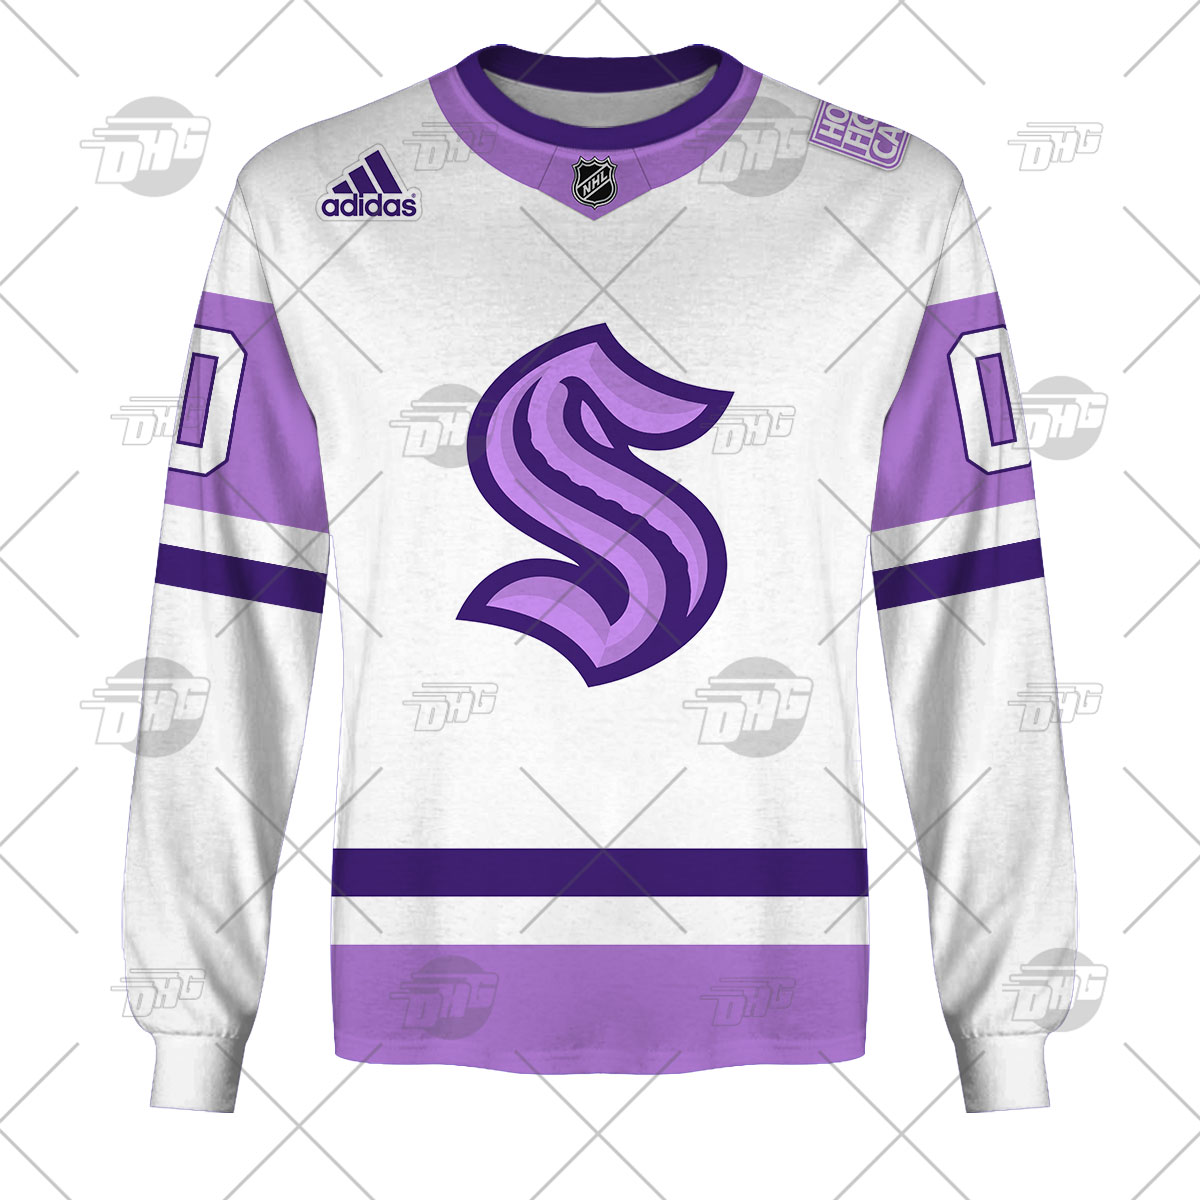 Men's Fanatics Branded White/Purple Colorado Avalanche Authentic Pro Hockey Fights Cancer Snapback Hat